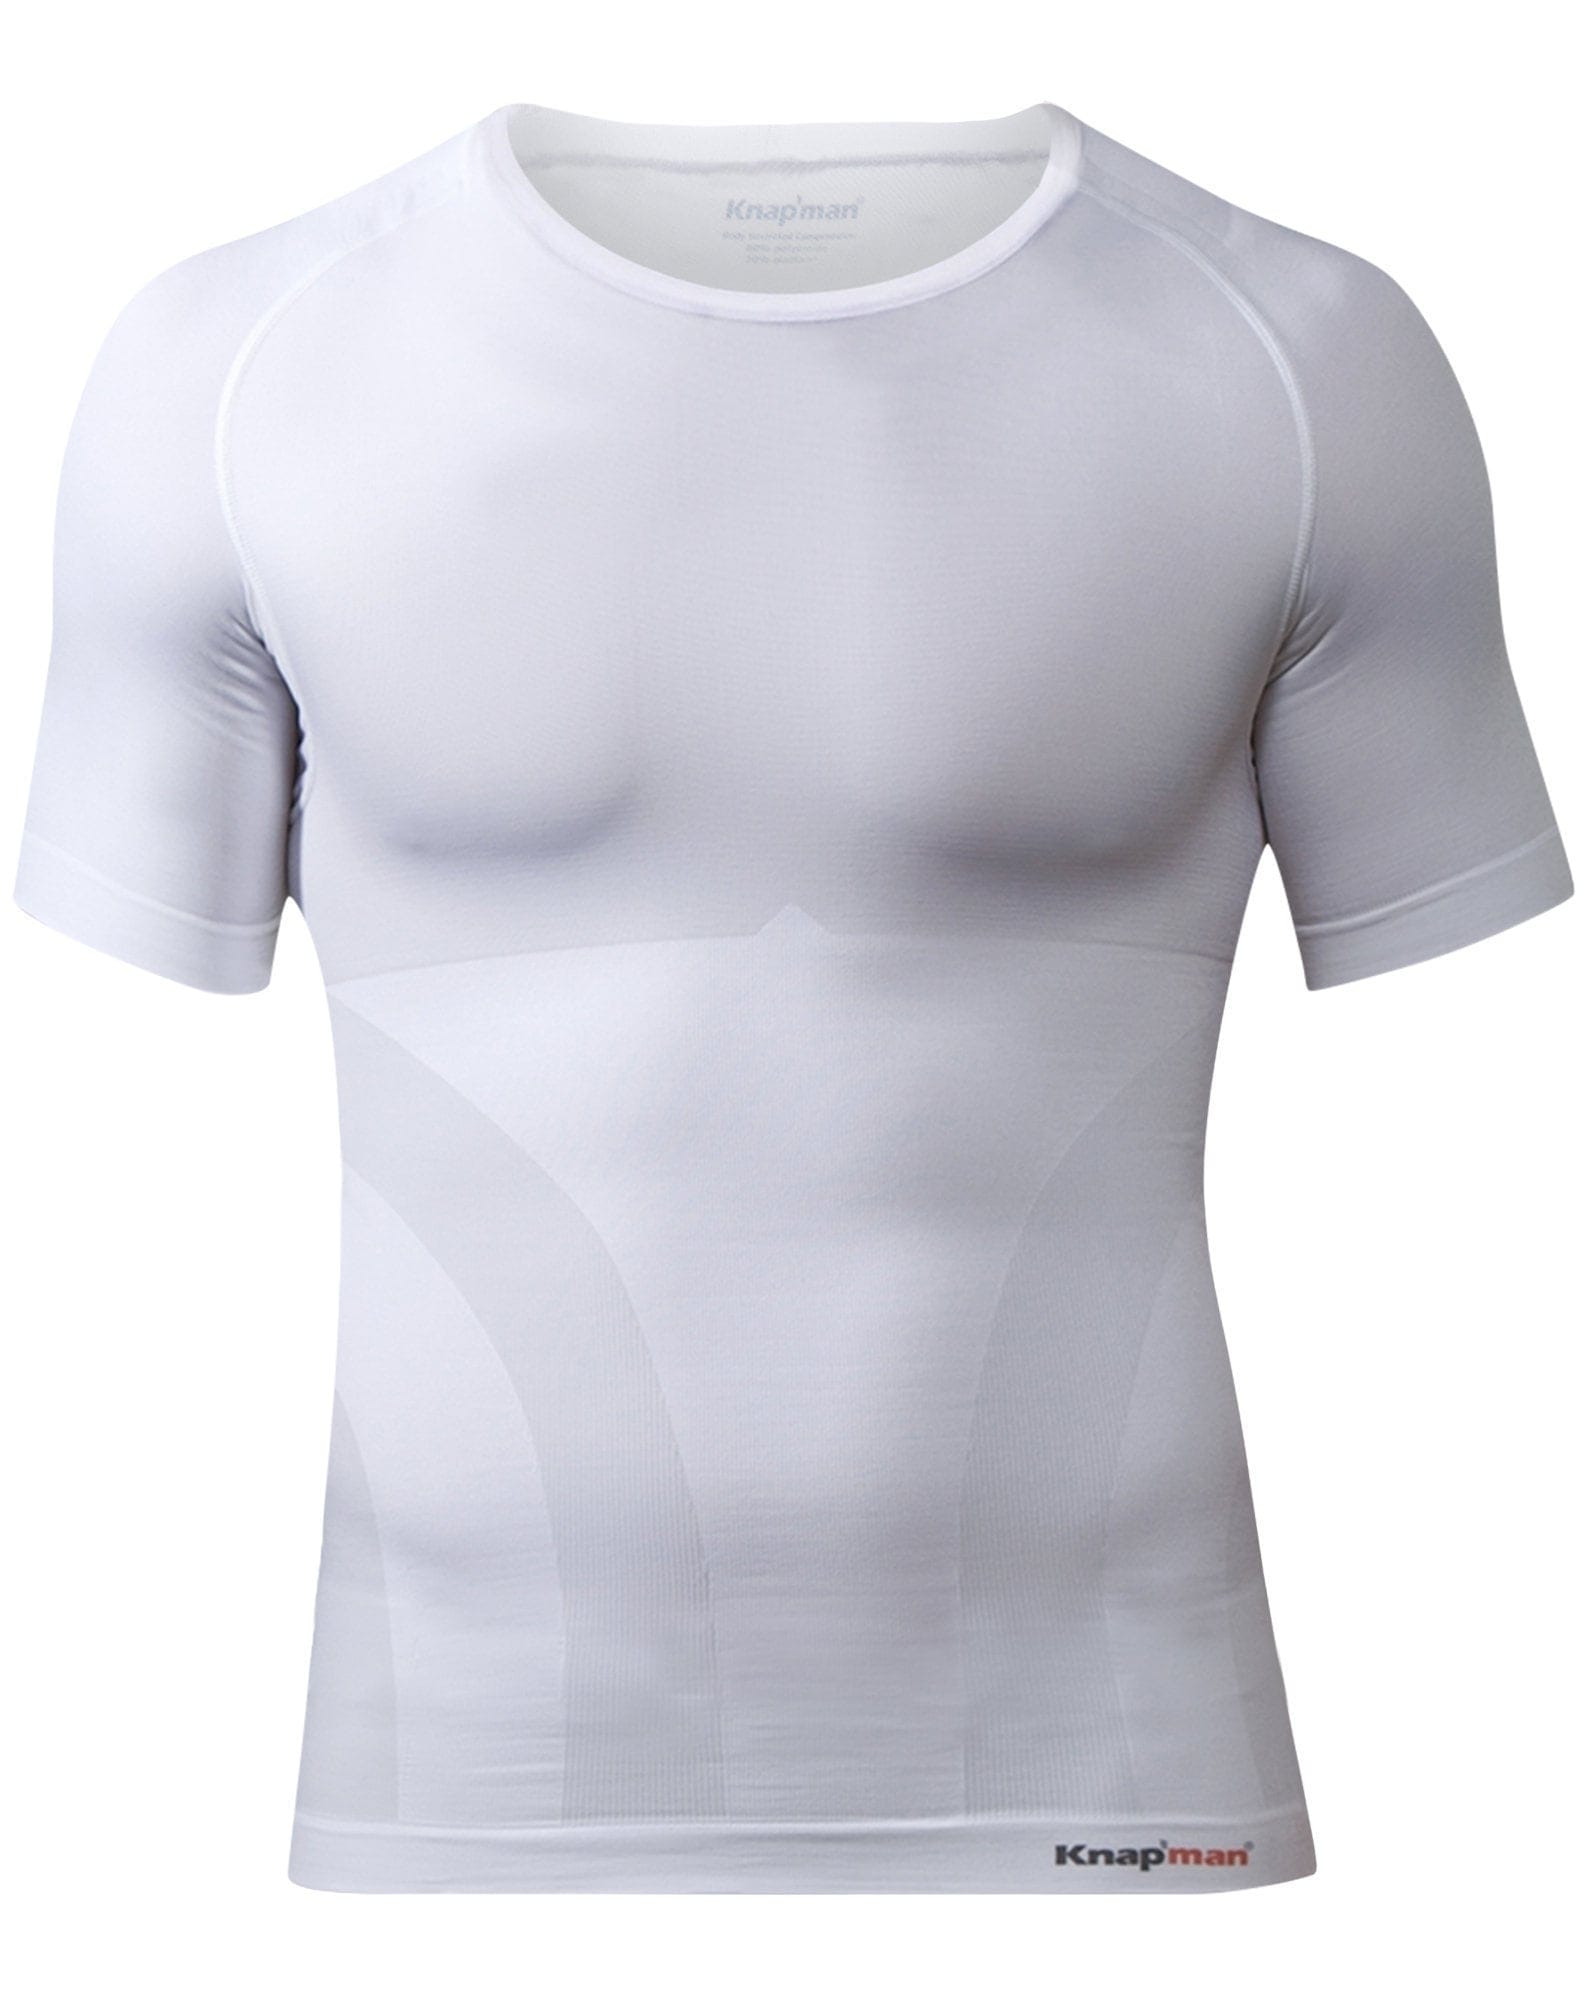 https://www.knapman.eu/product/89-large-knapman-mens-compression-shirt-crew-neck-white.jpg